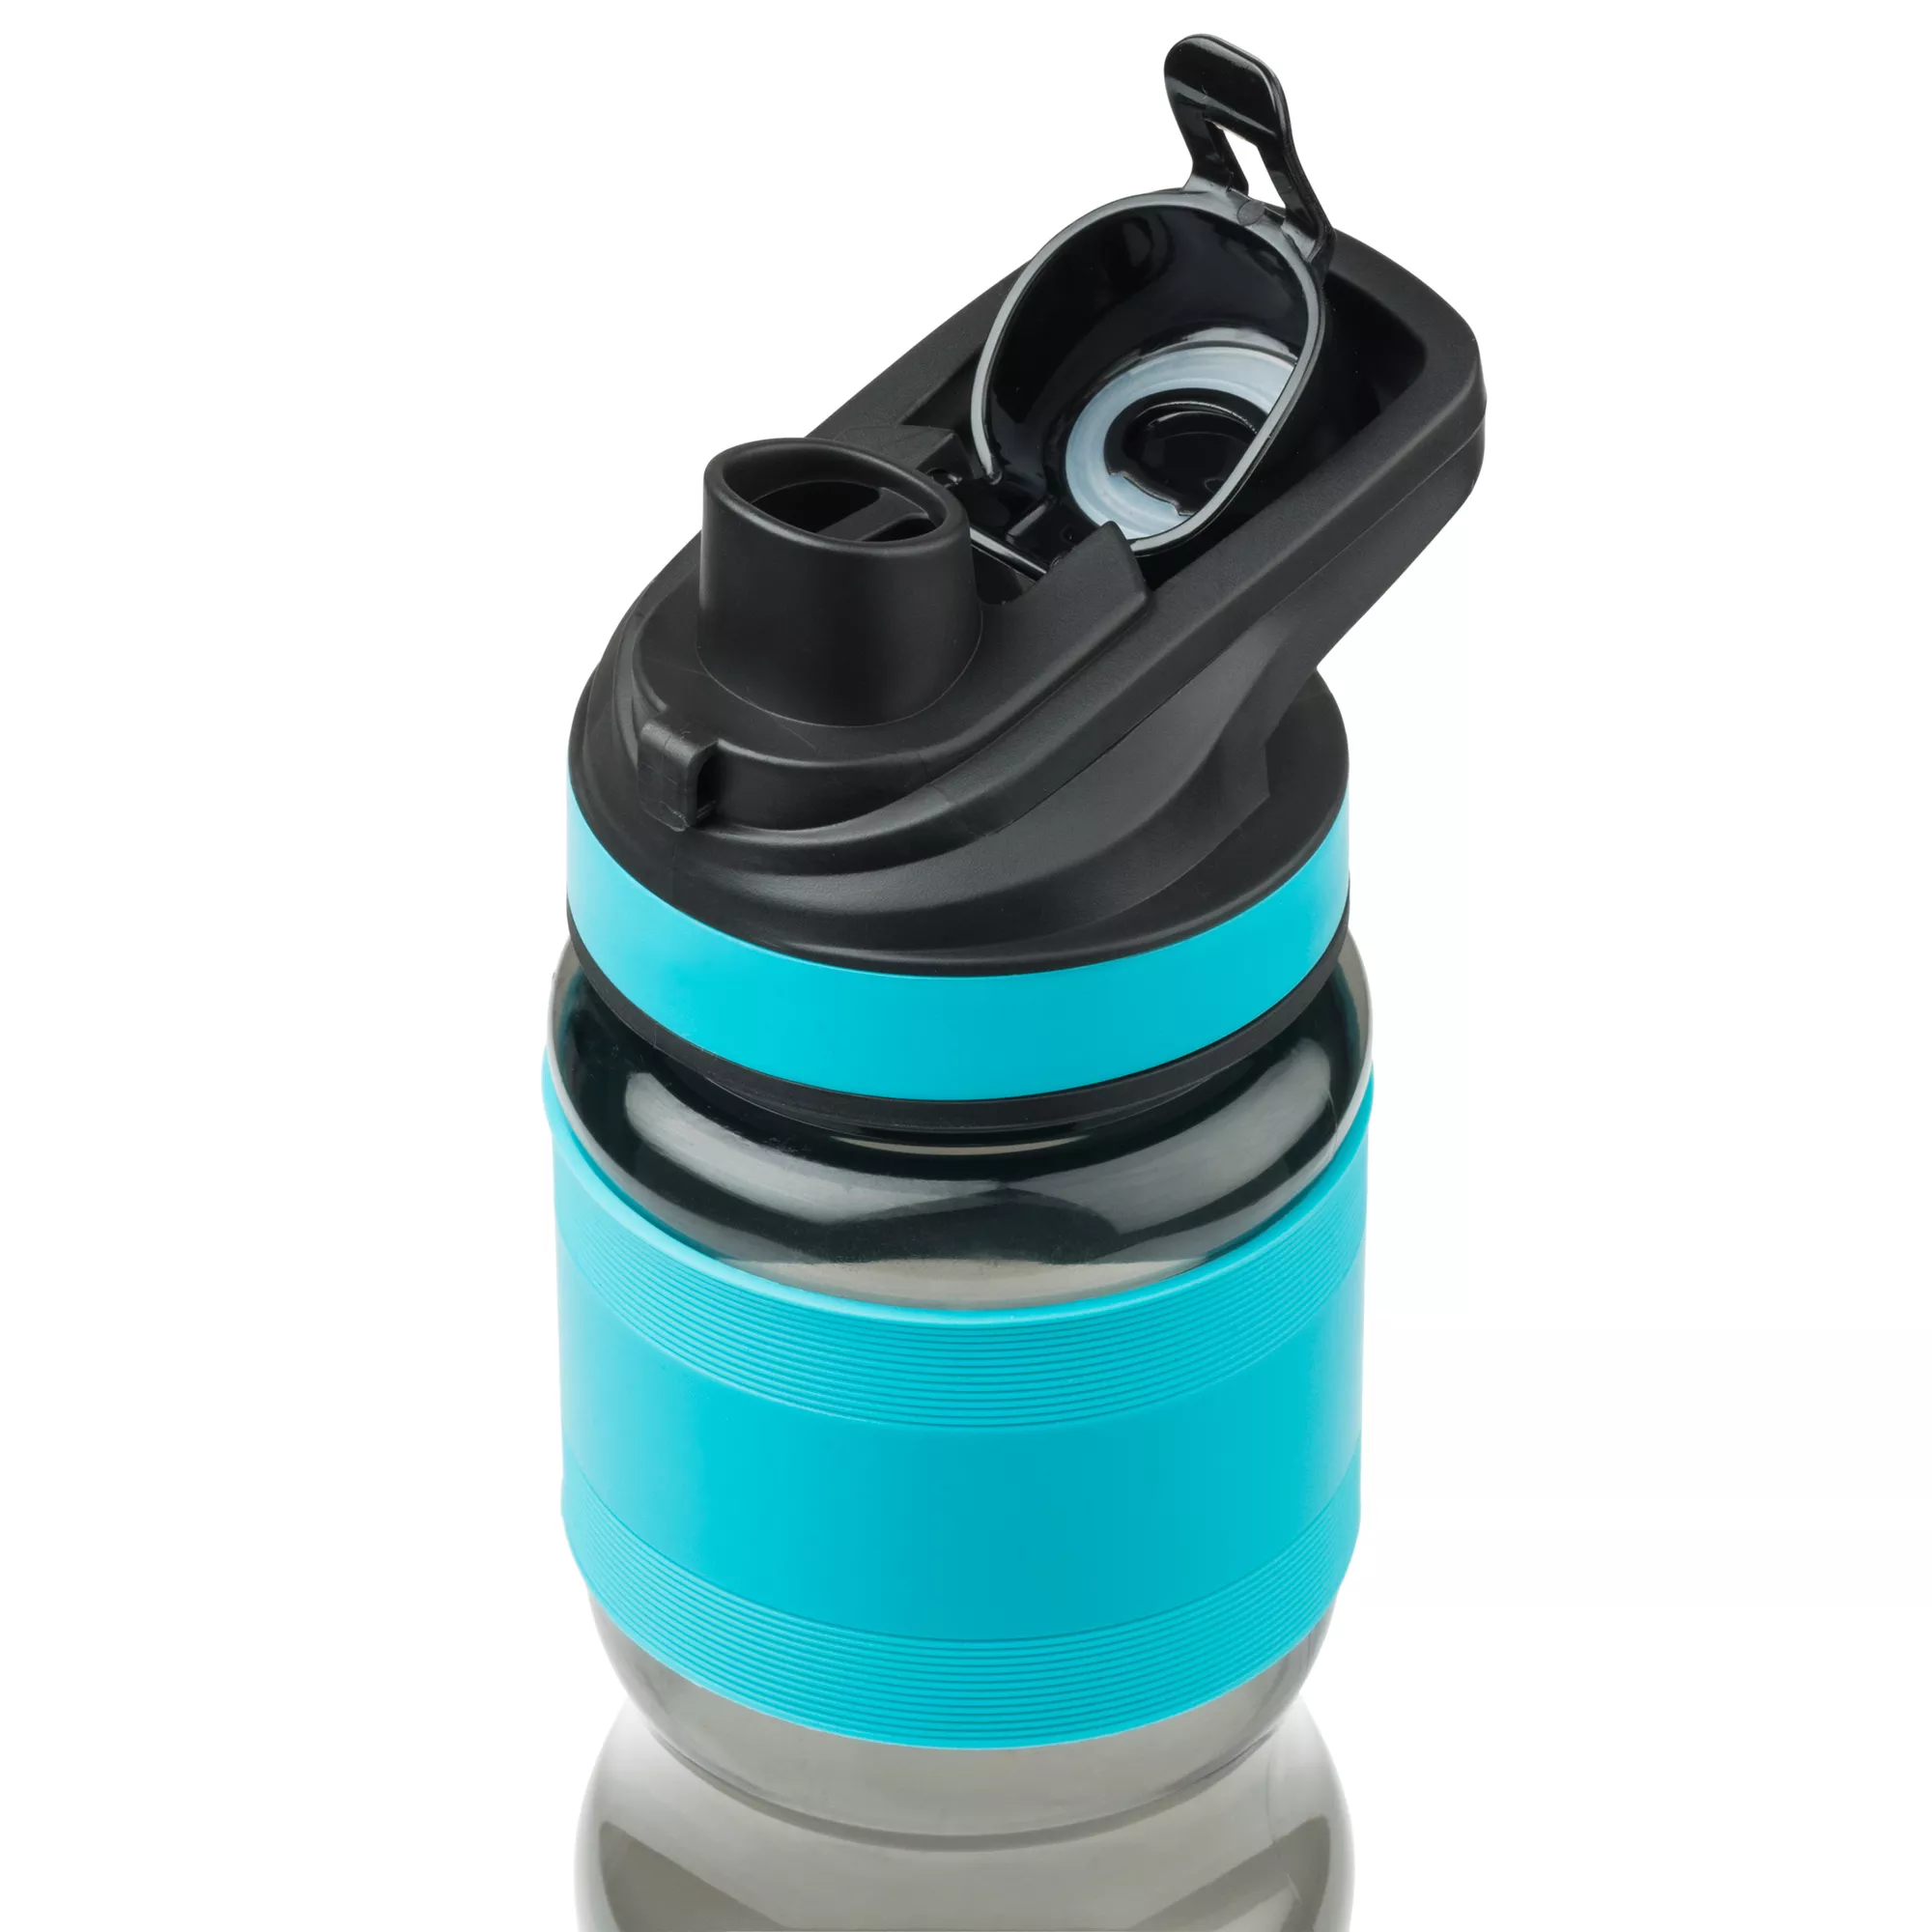 Спортивная бутылка для воды Corsa 650ml аква